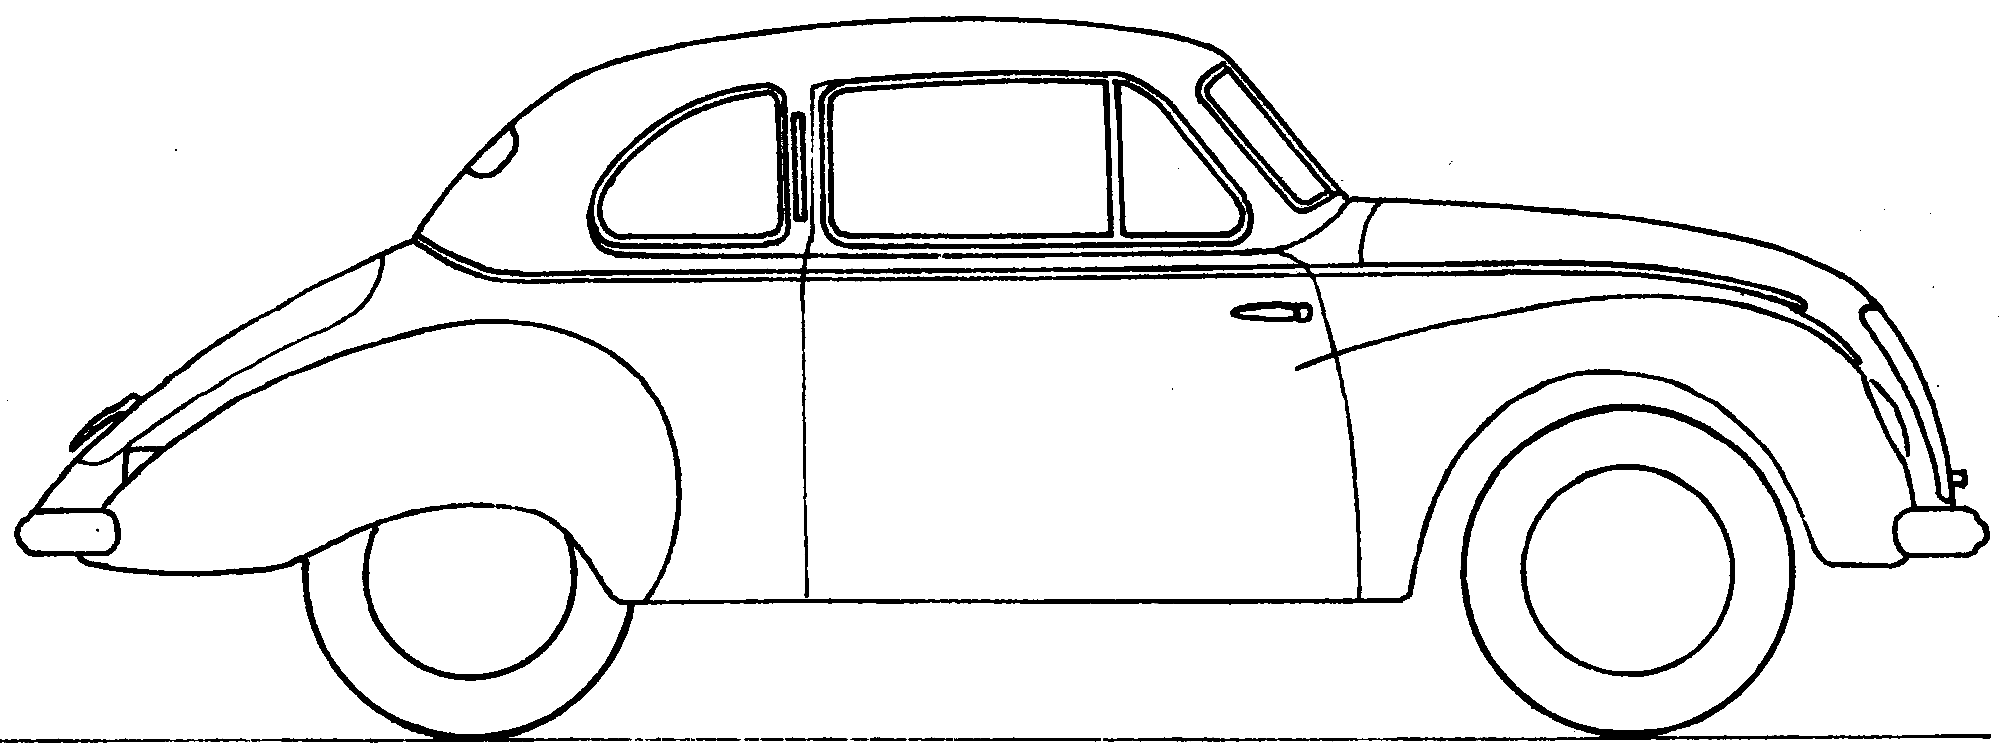 IFA F9 DKW blueprints